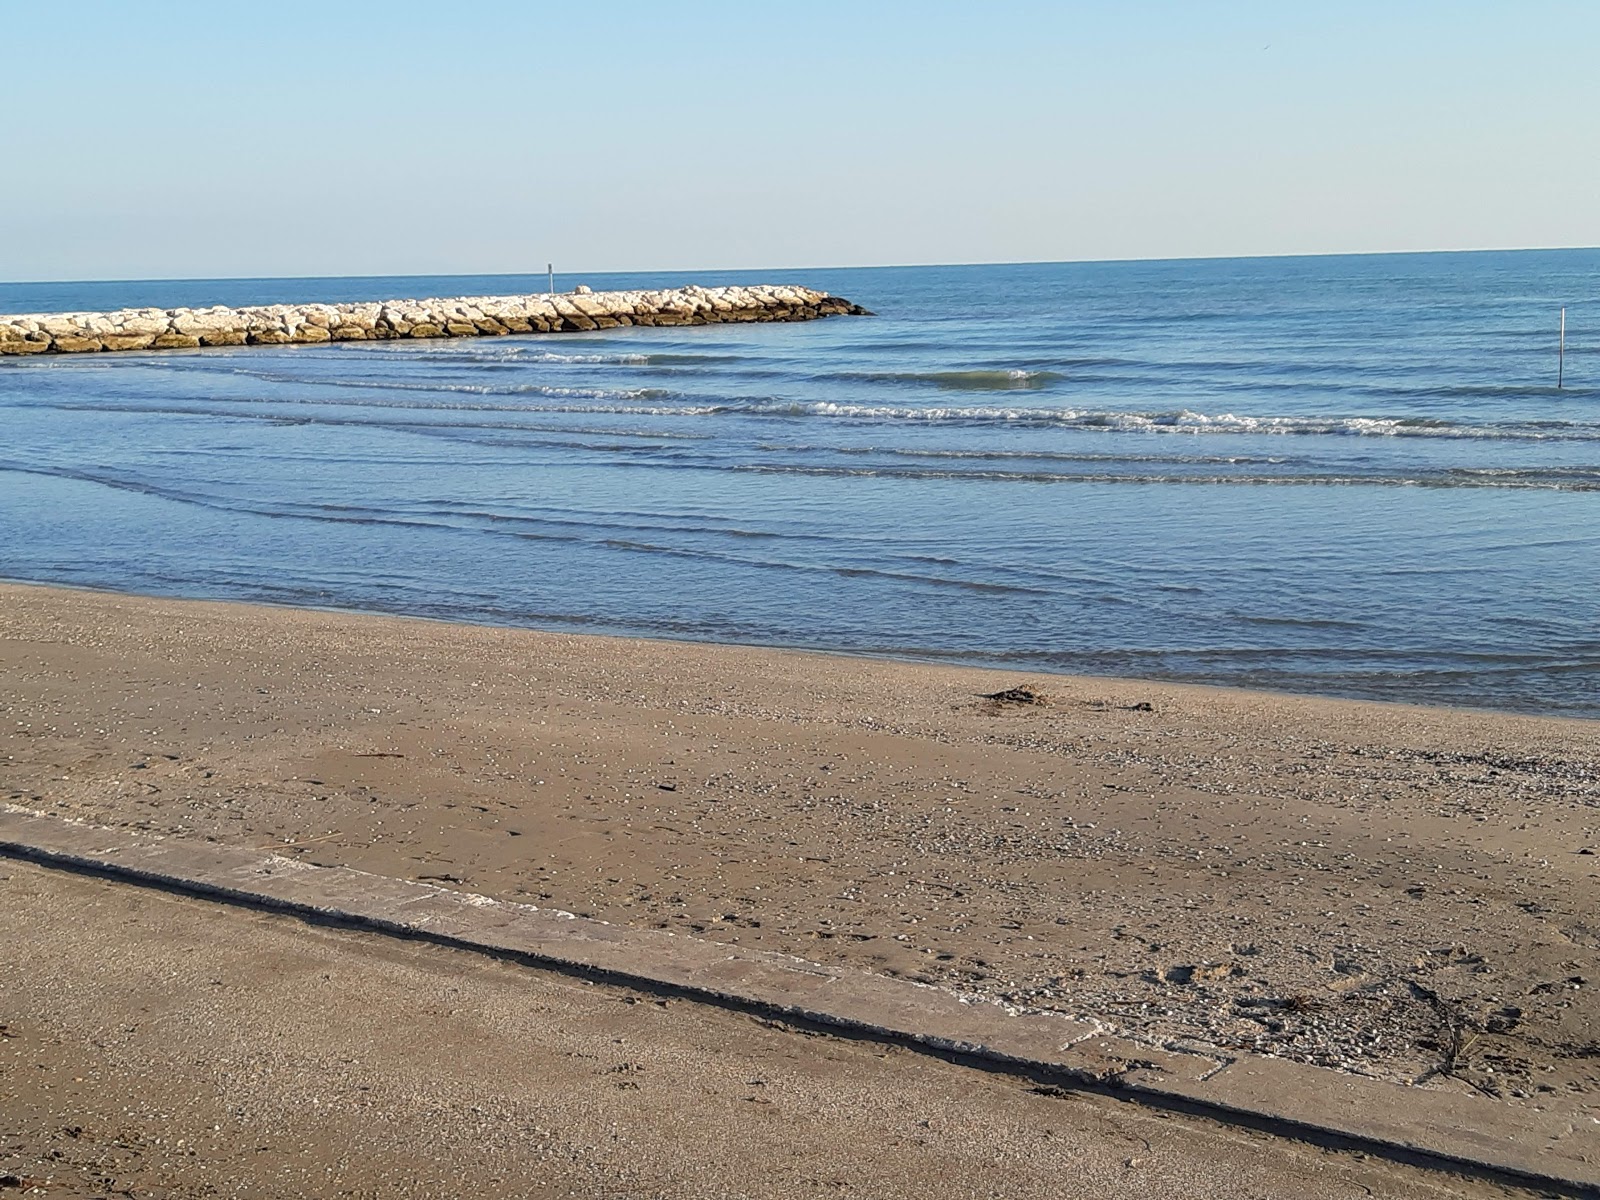 Fotografie cu Spiaggia di Caorle - locul popular printre cunoscătorii de relaxare